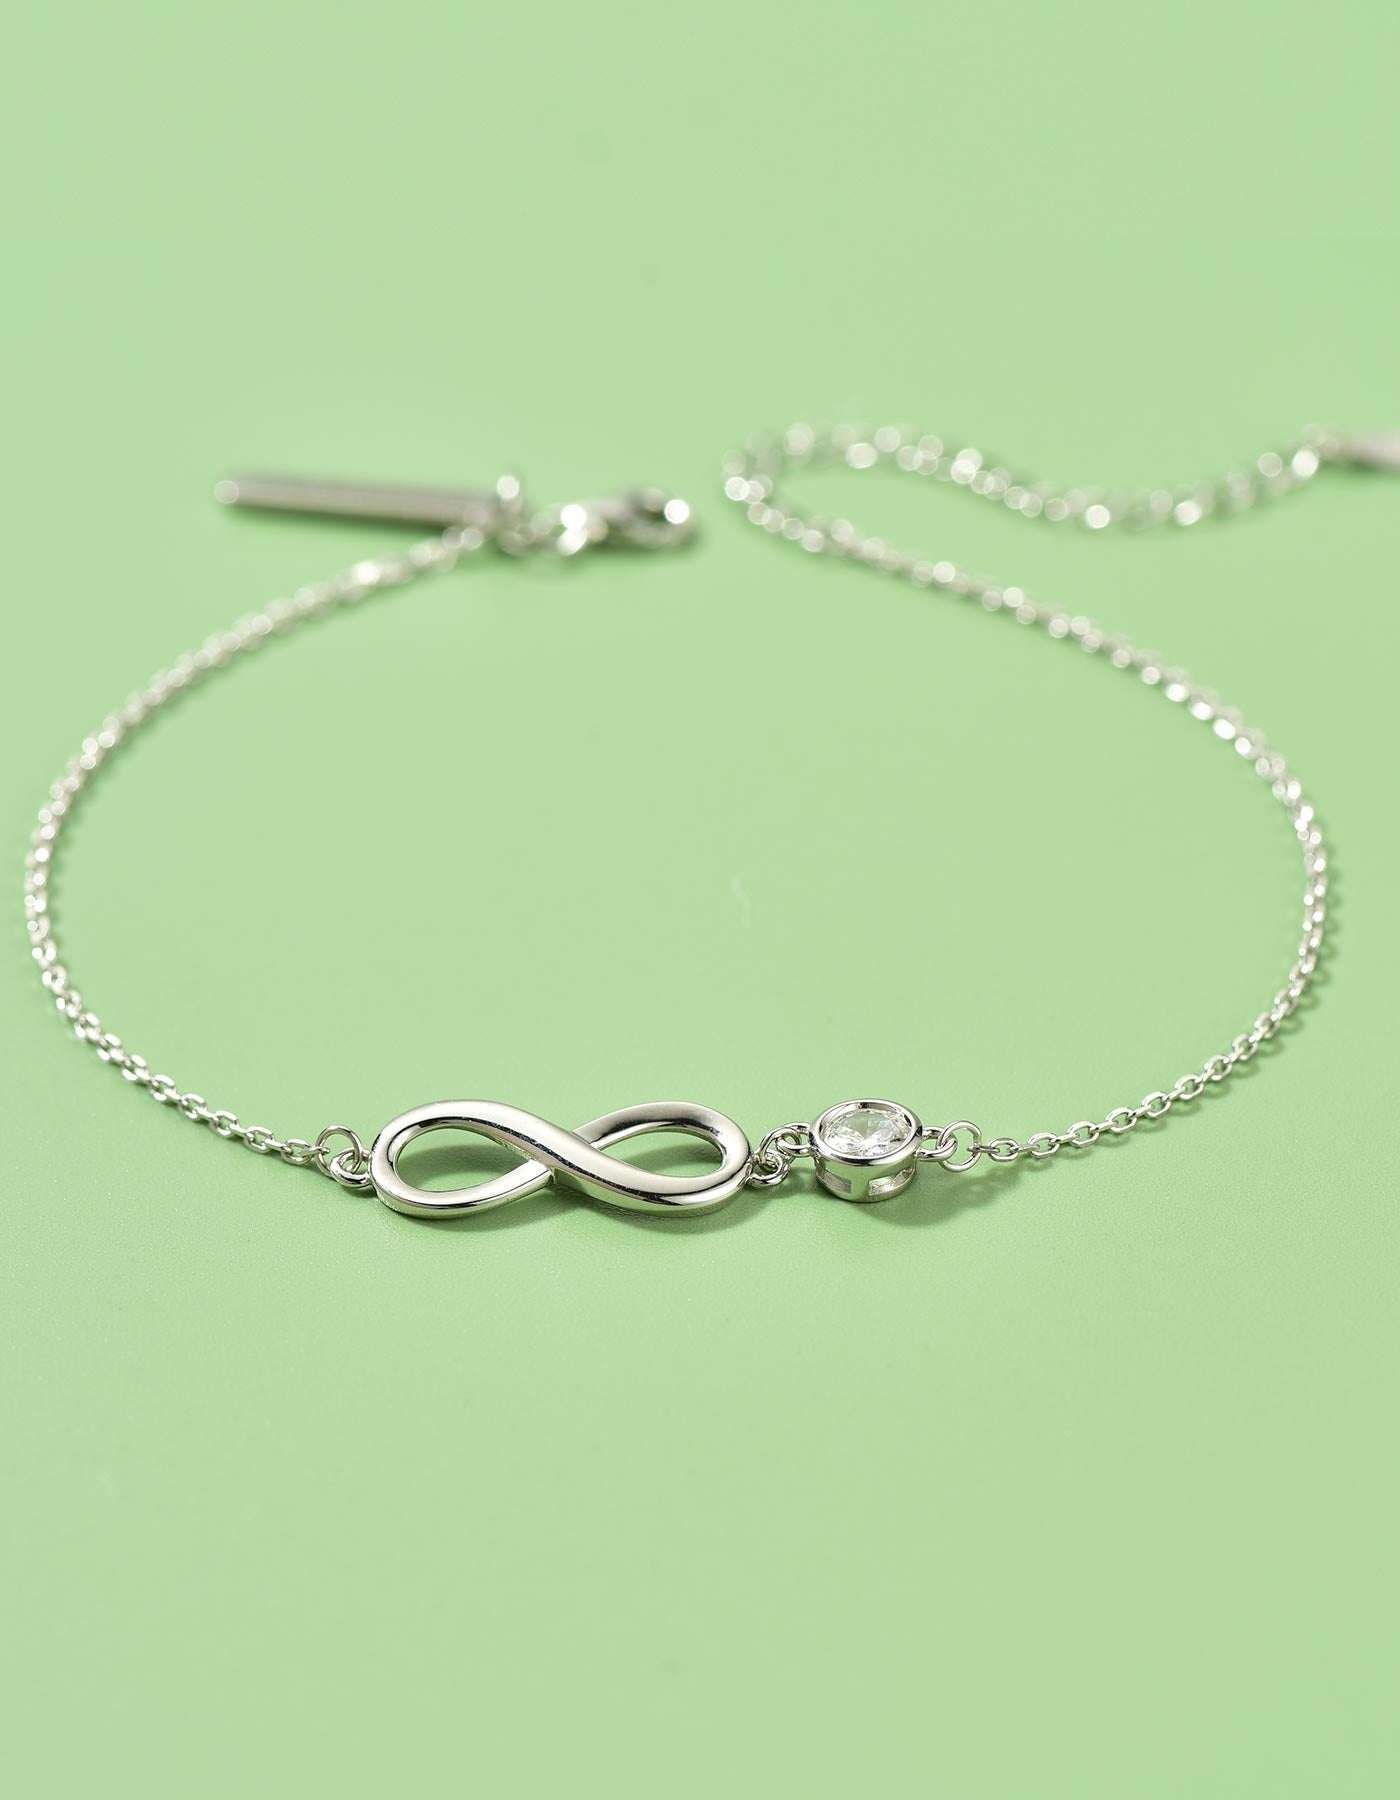 MomentWish Stone Sterling Silver Infinity Bracelet For Women